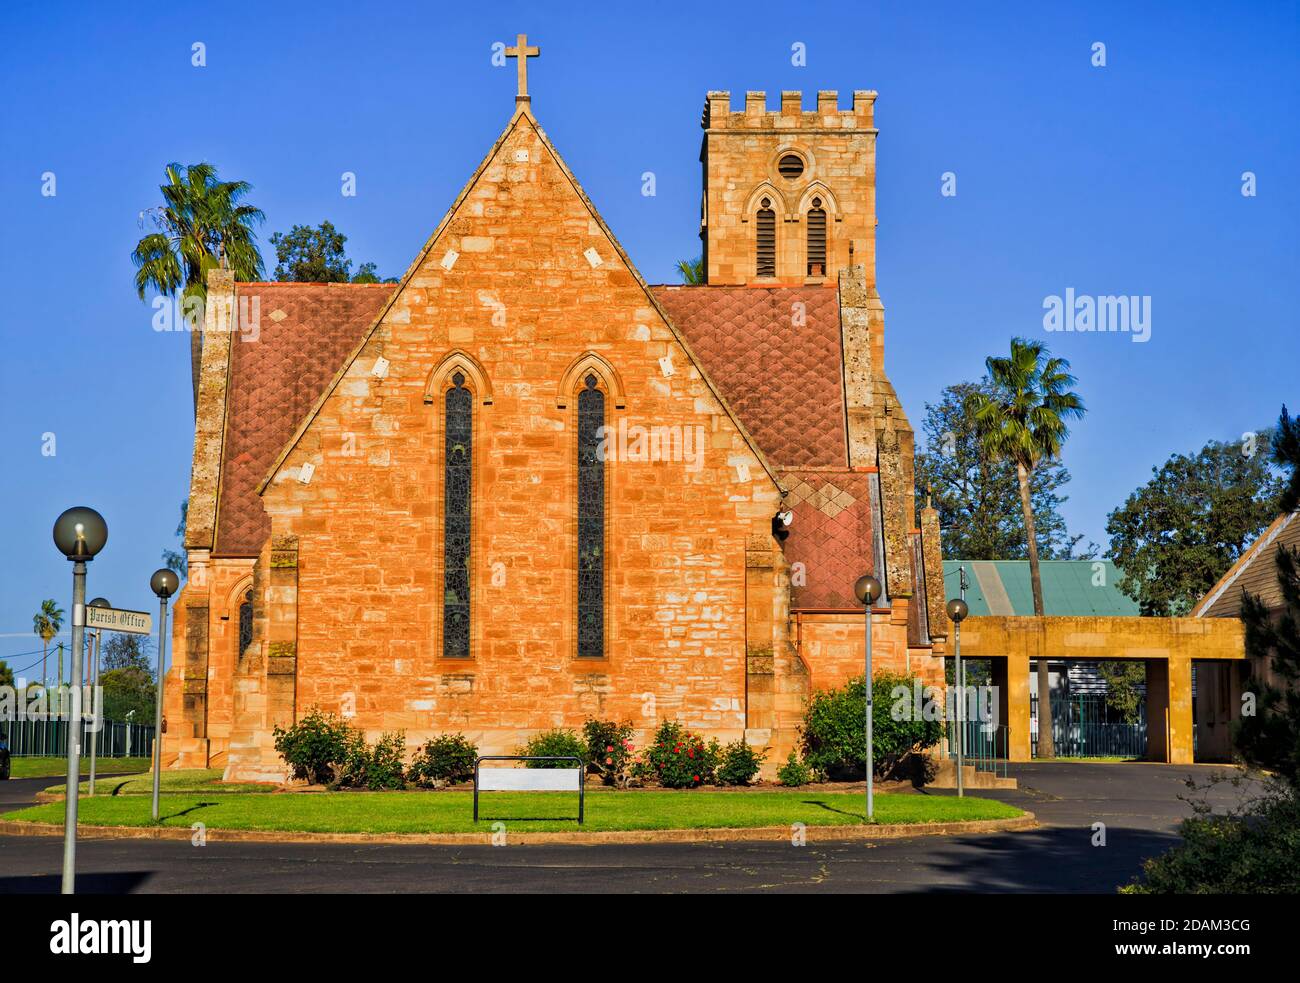 Sandstone historic building of catholic church in Dubbo city of Australia. Stock Photo